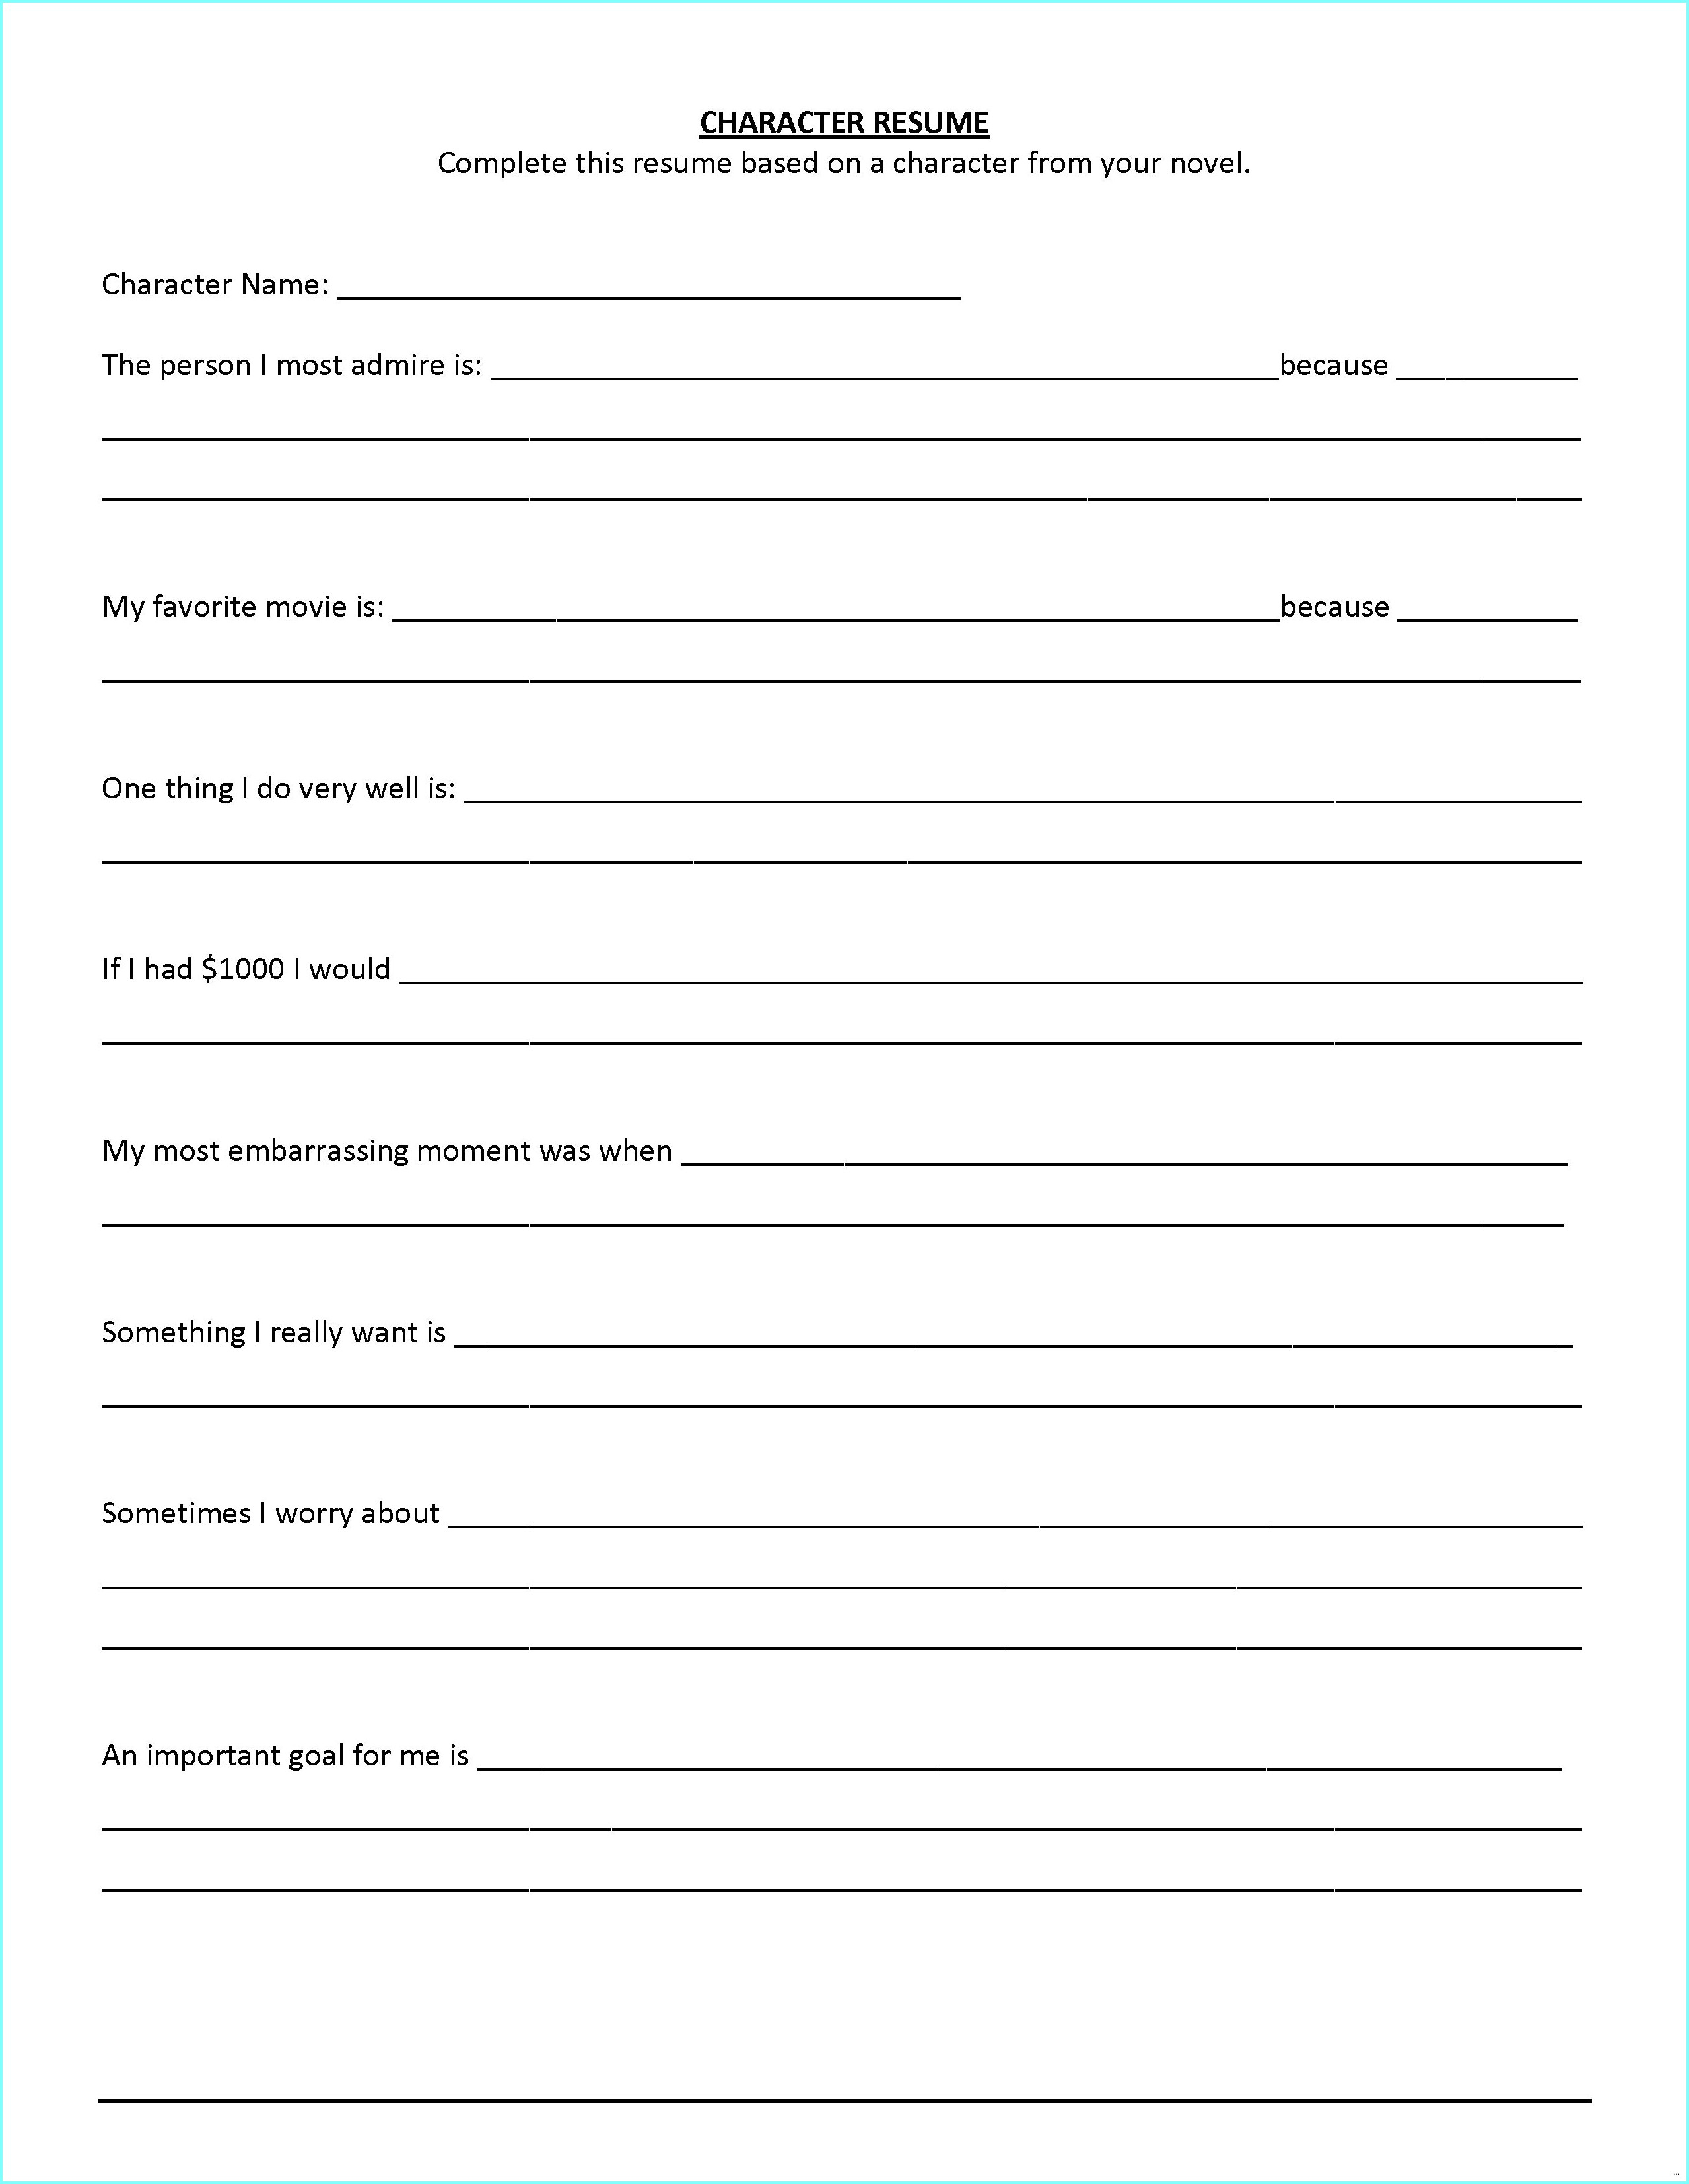 Free Printable Blank Resume Forms - Resume : Resume Examples #l5Wypkk3Q2 - Free Printable Blank Resume